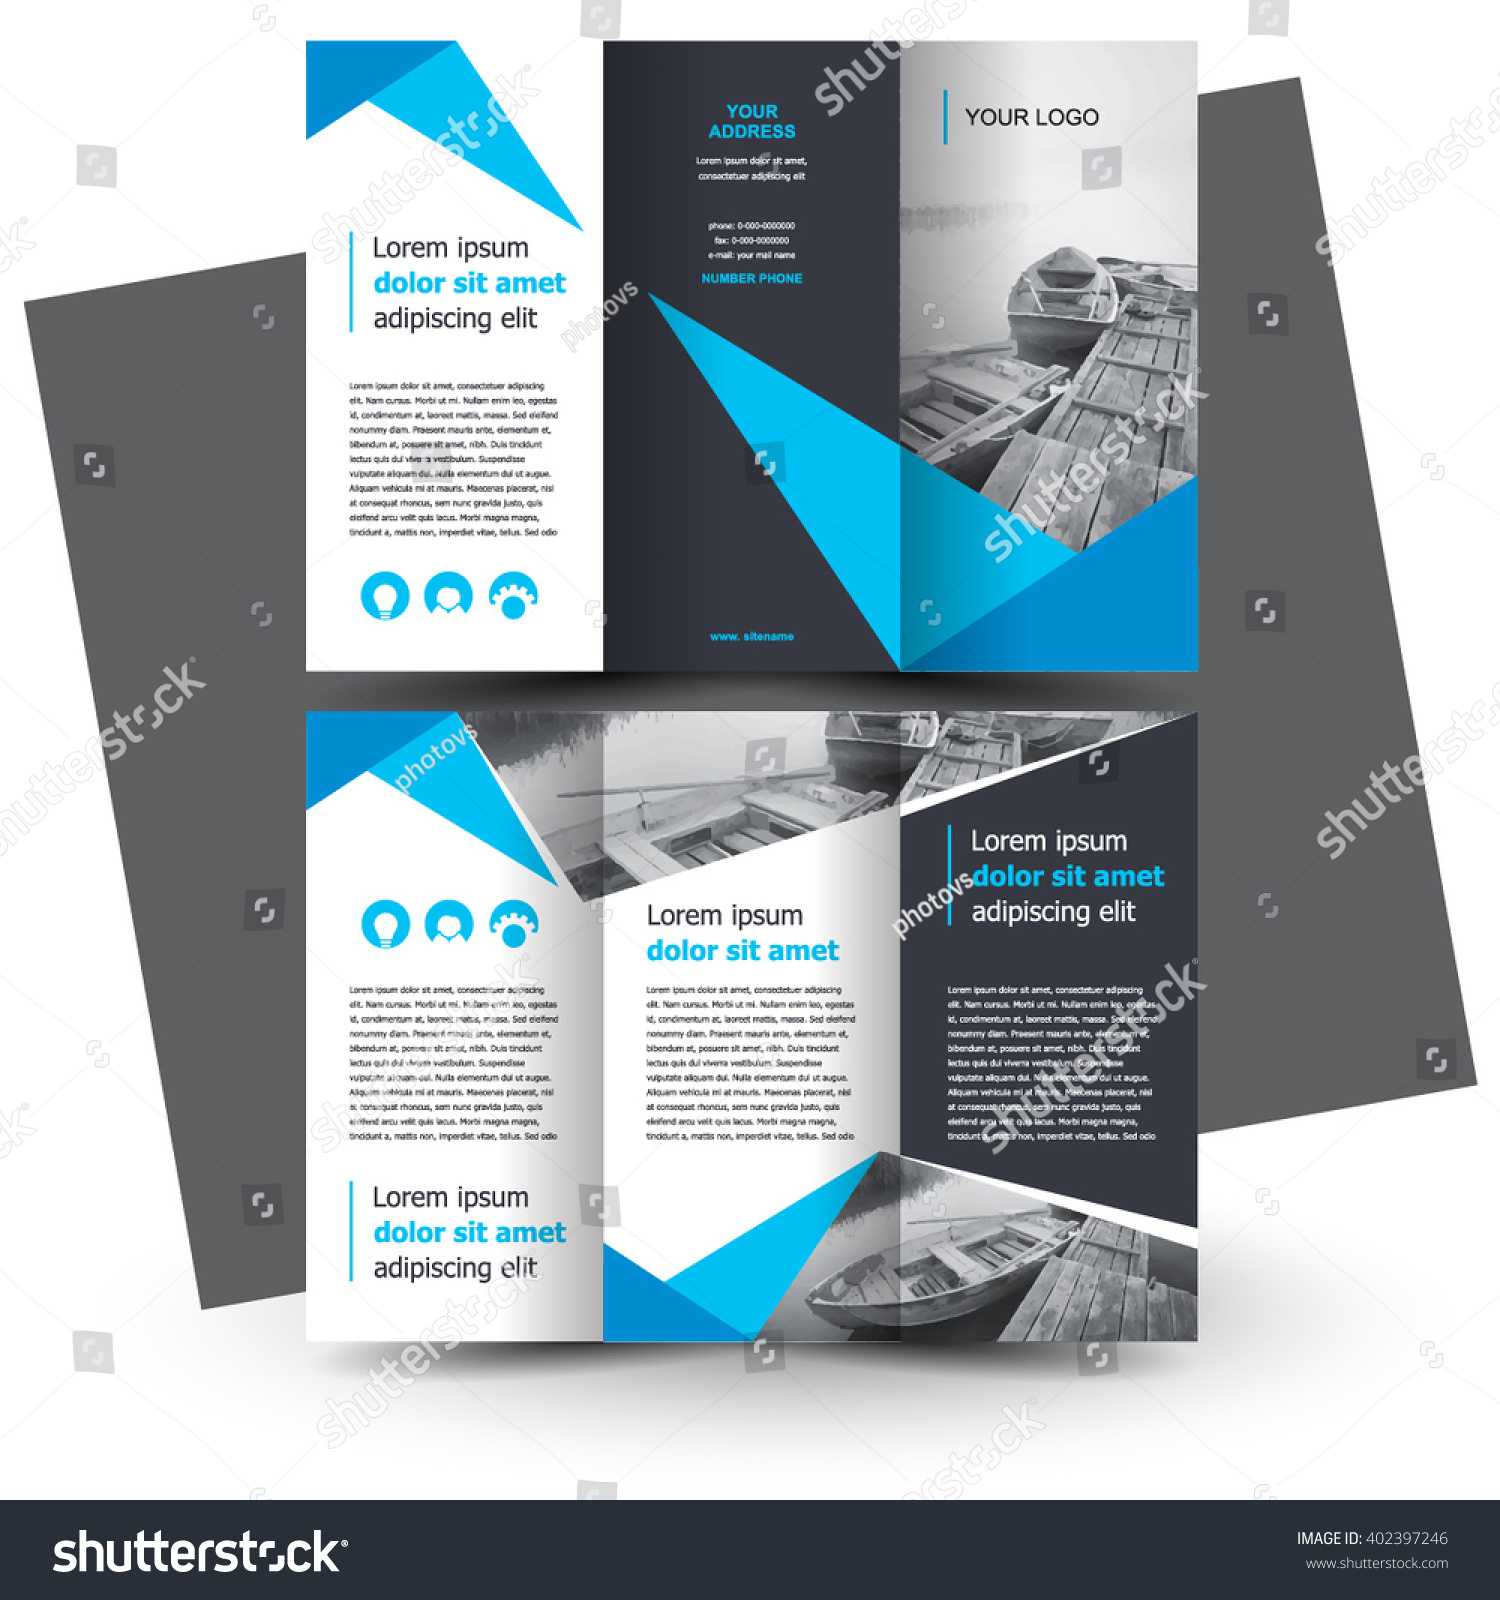 Catalog Design Templates Free Download ] – Brochure Design For Engineering Brochure Templates Free Download